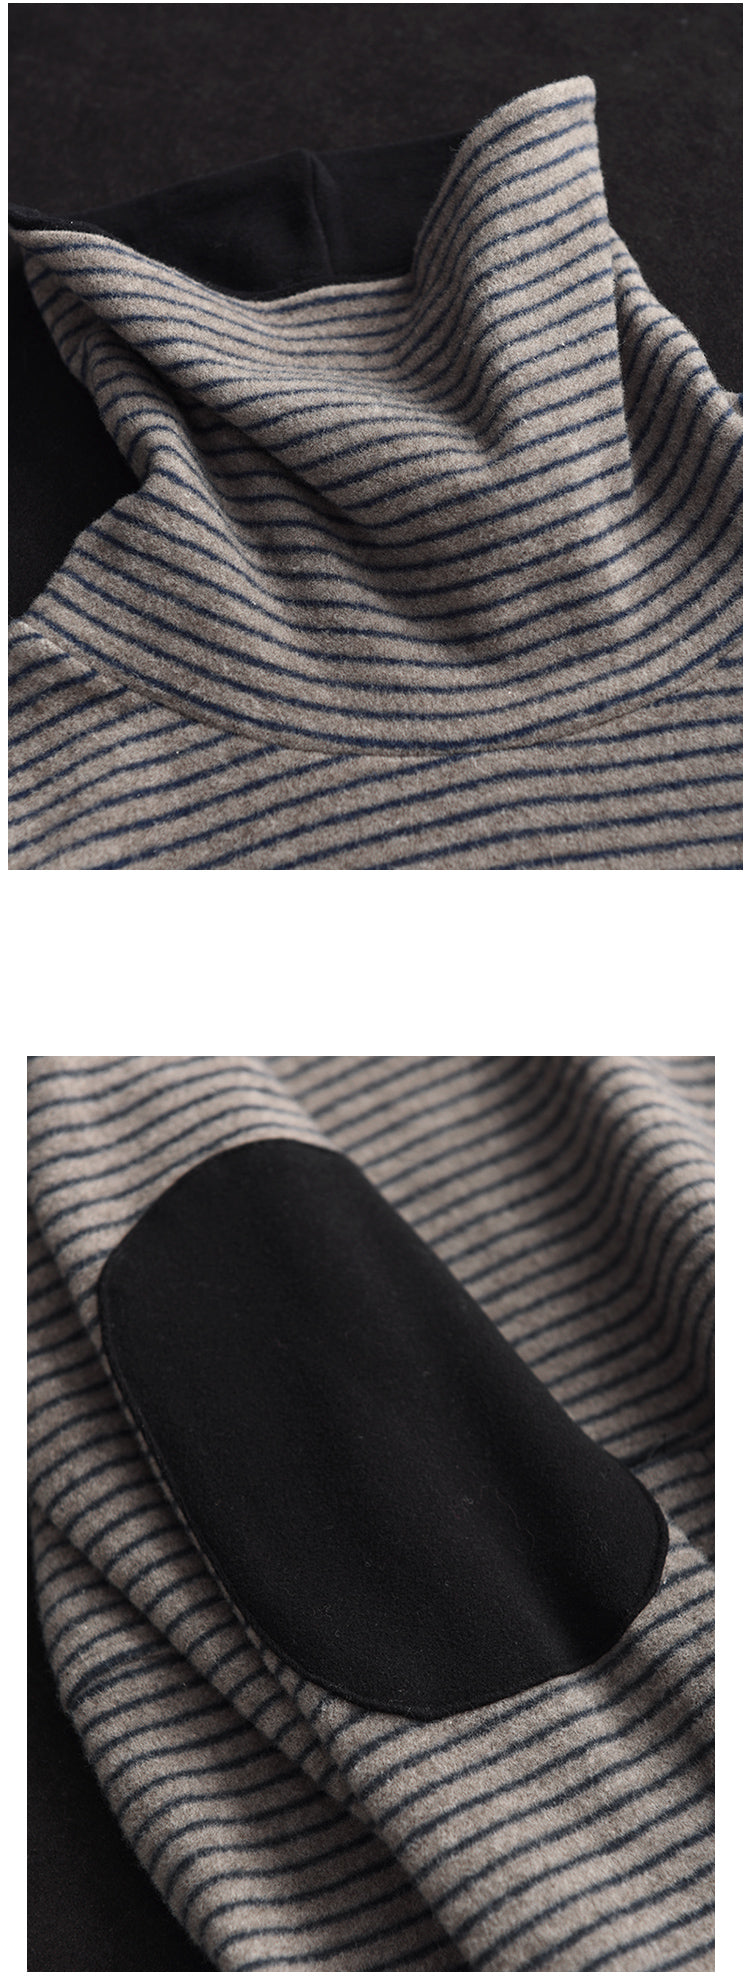 Stylish Striped Cashmere Striped Color Block Turtleneck Top